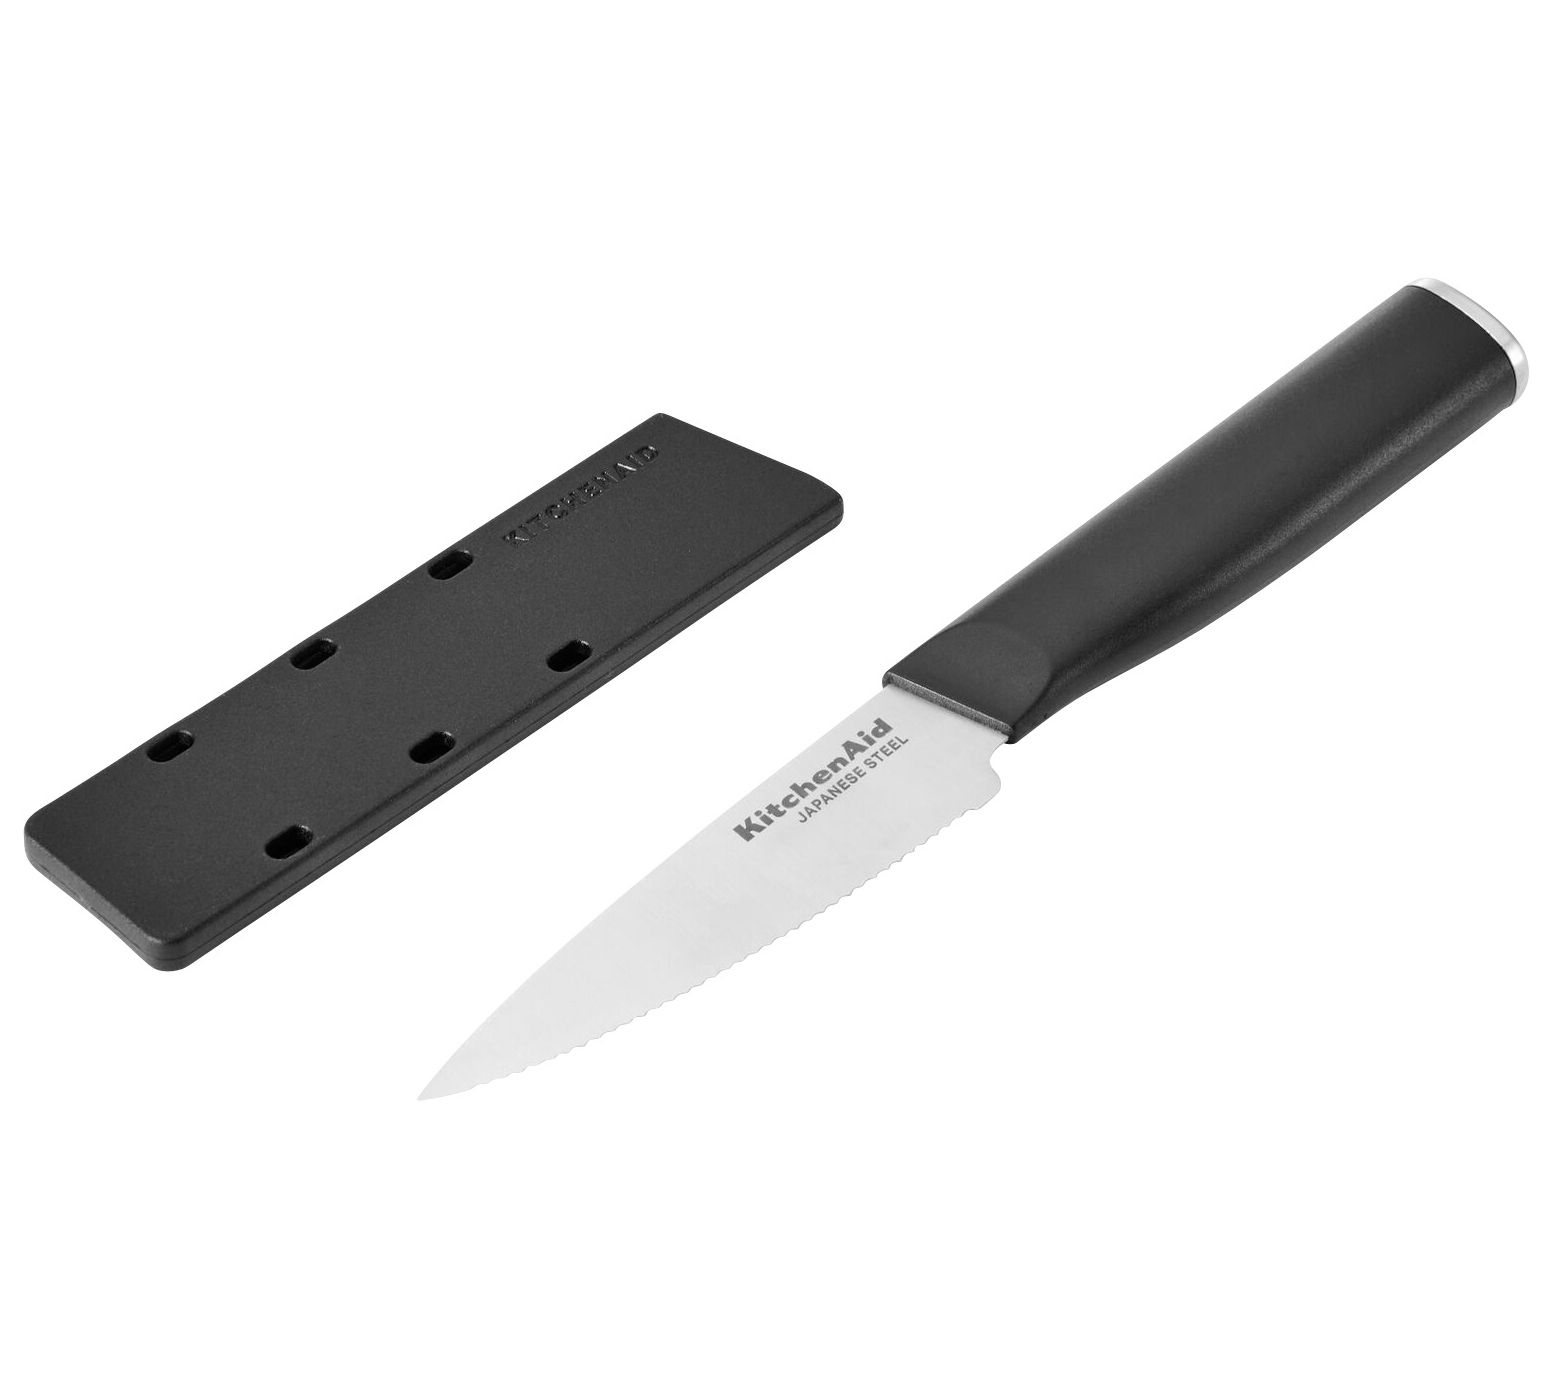 Wüsthof Classic 3.5 Serrated Paring Knife